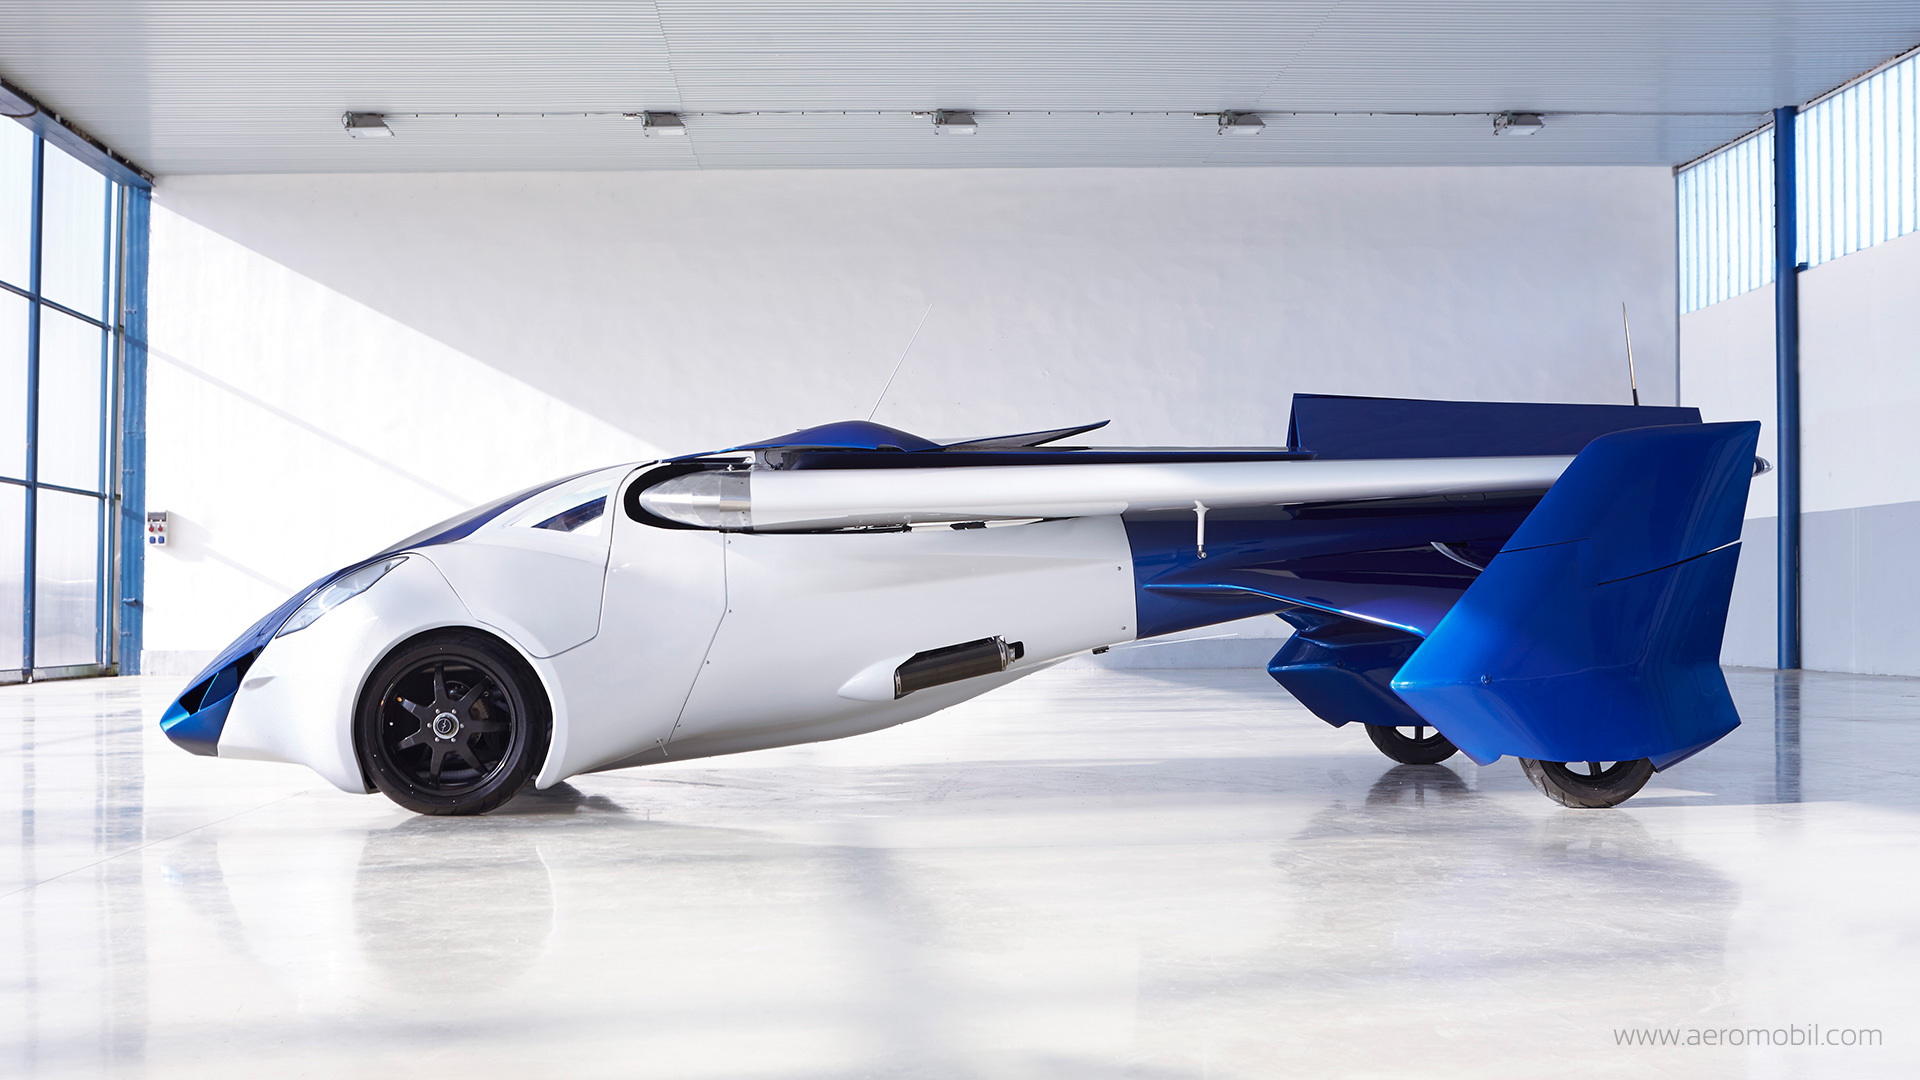 Aeromobil 3.0 flying car prototype